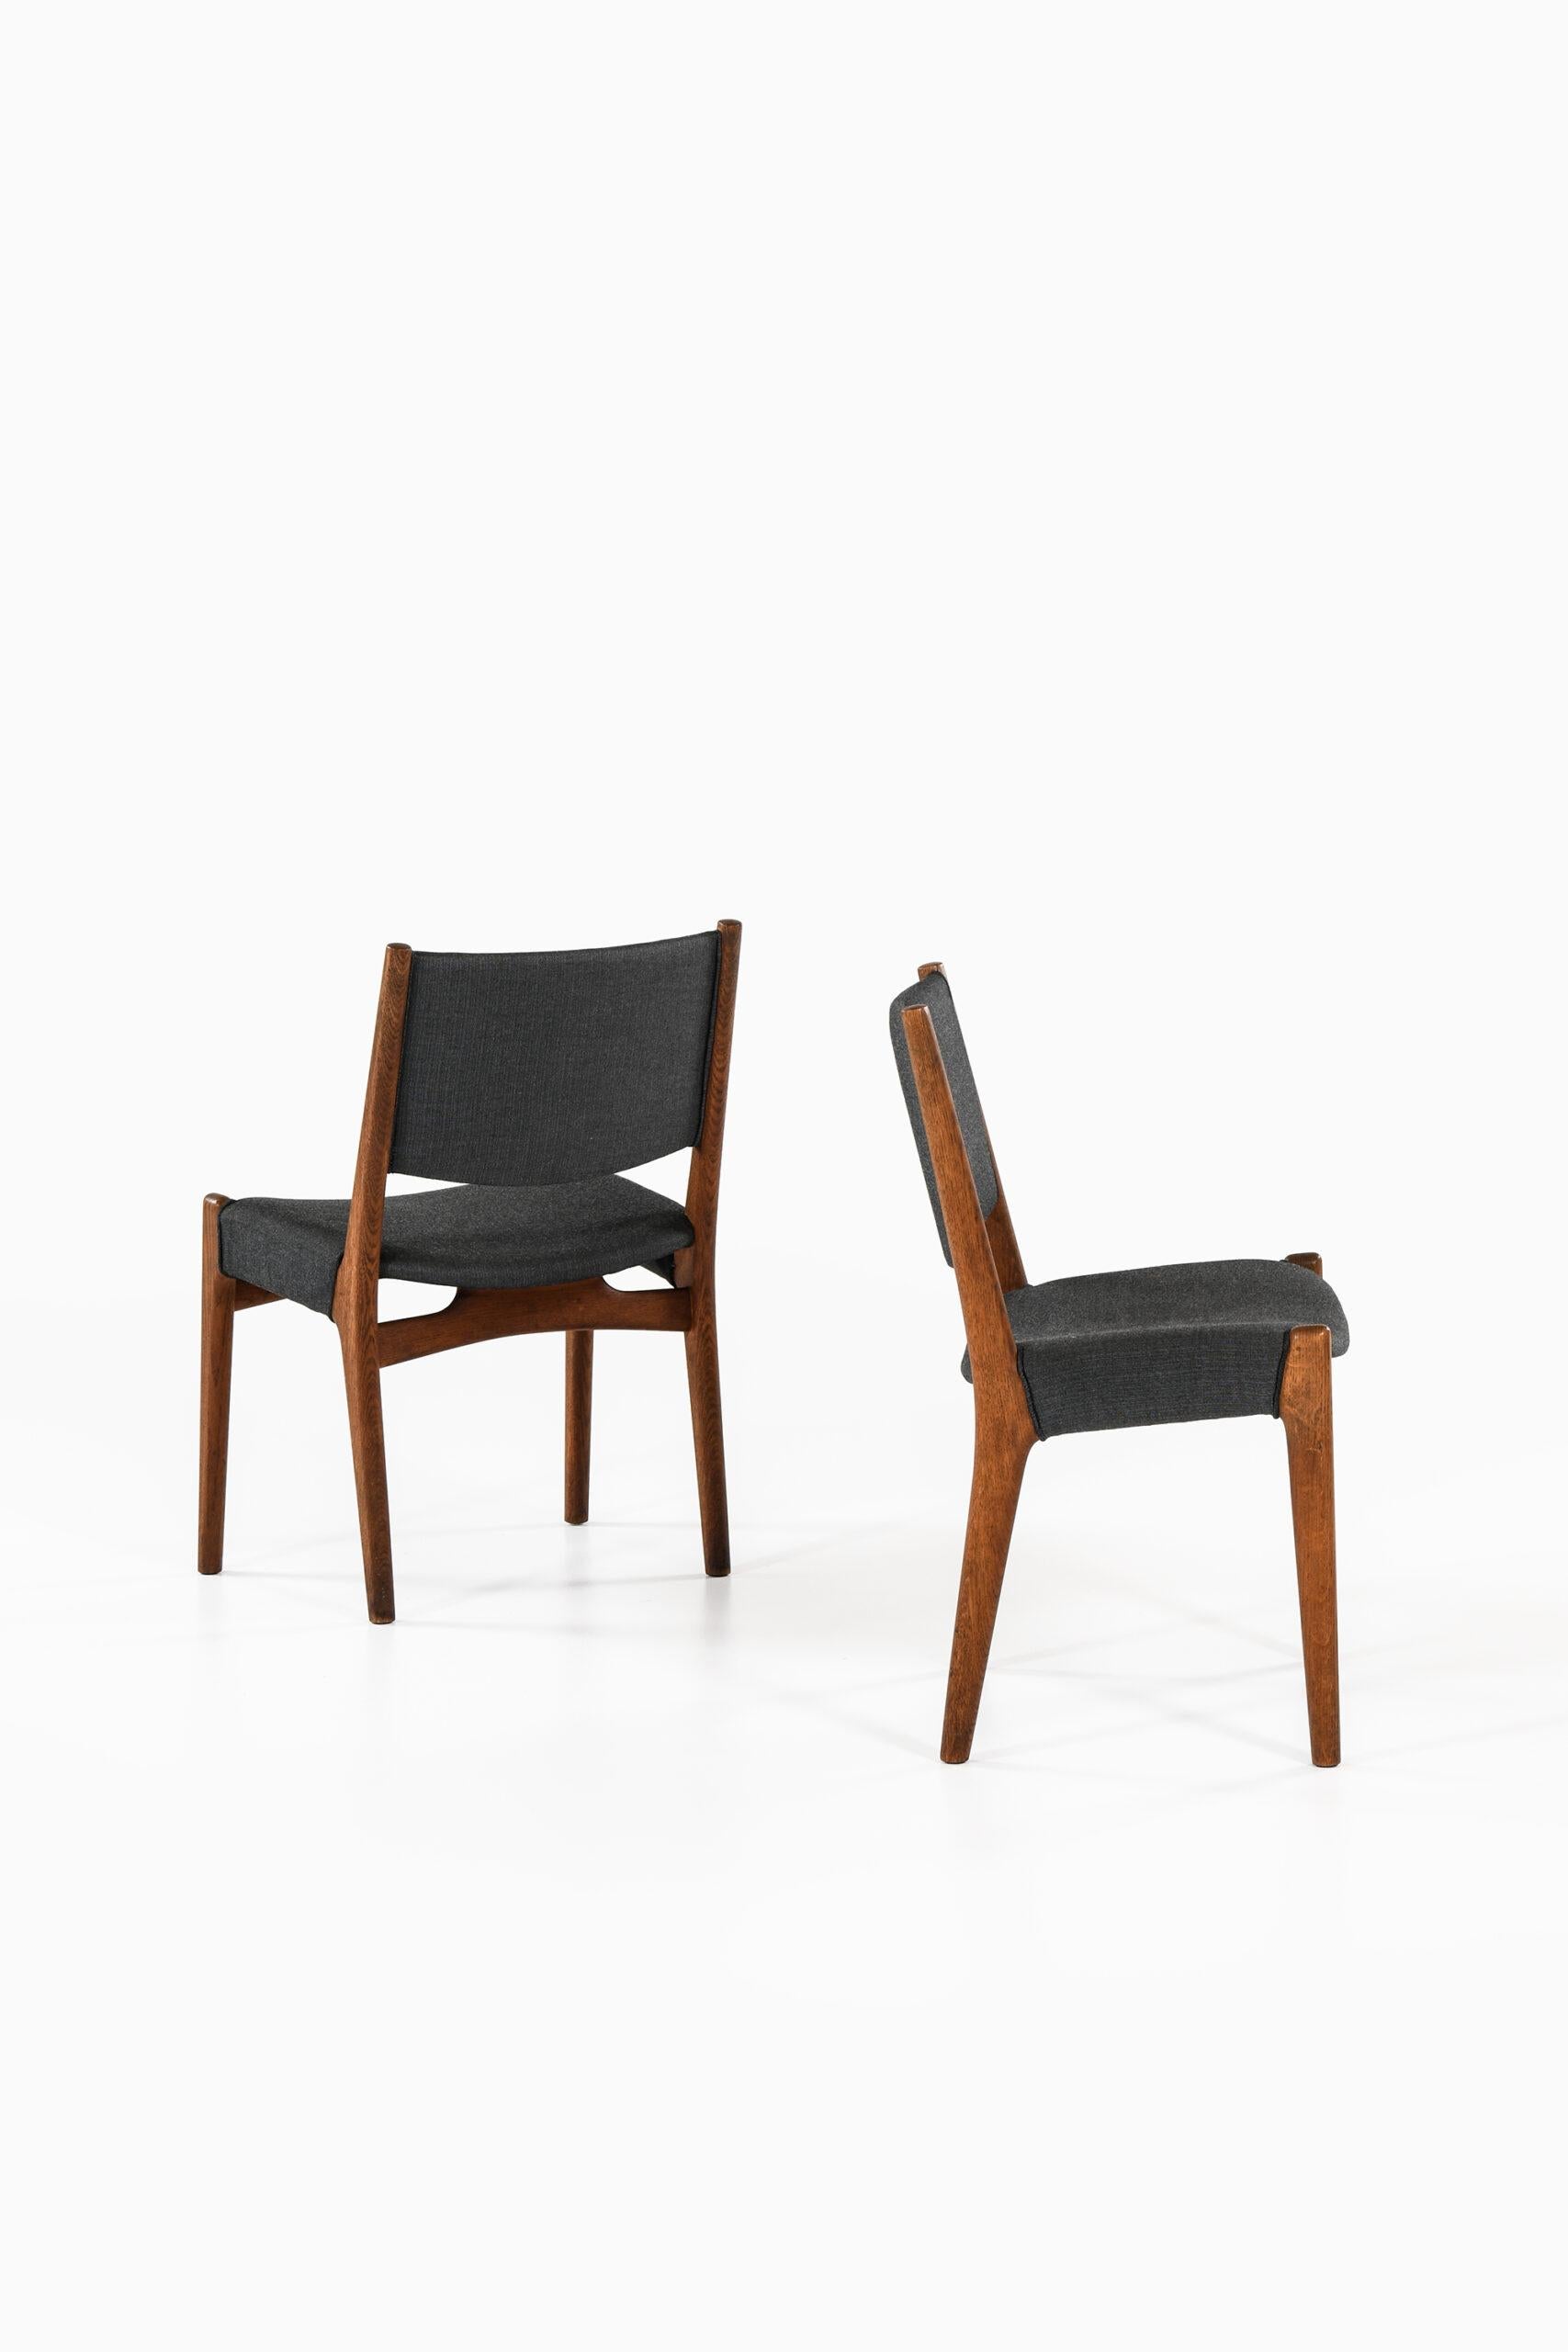 Very rare dining chairs designed by Hans Wegner. Produced by cabinetmaker Johannes Hansen in Denmark.